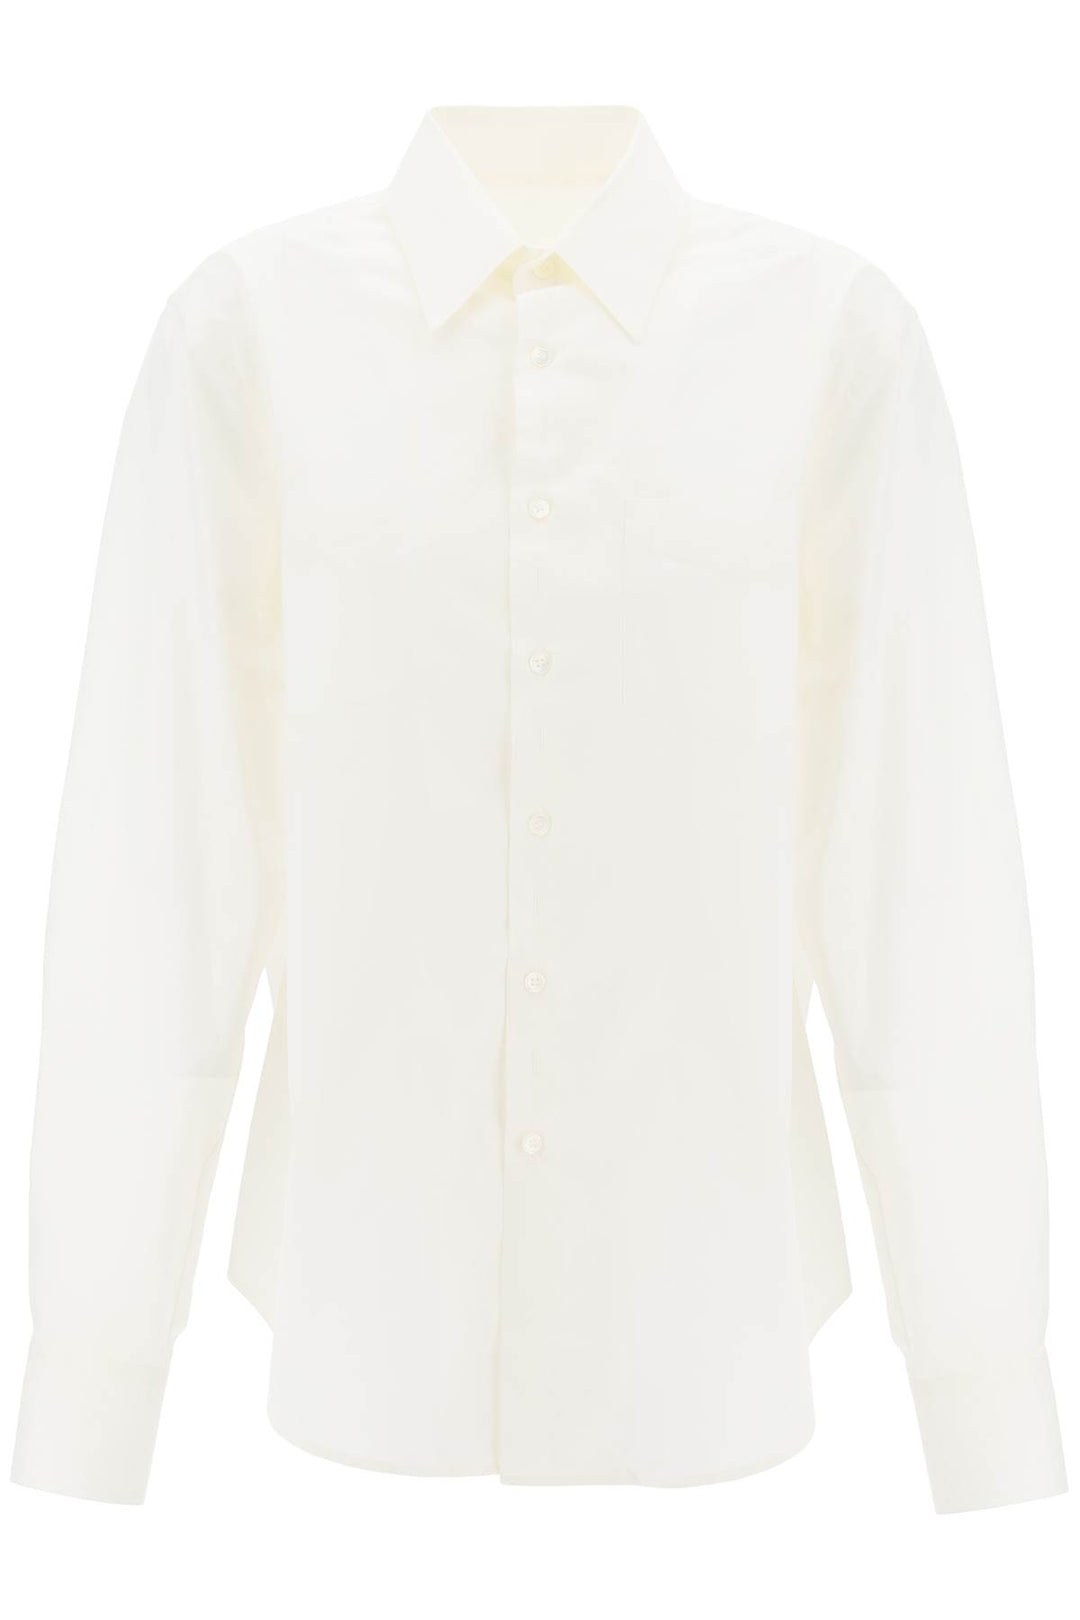 Mm6 Maison Margiela Cut Out Shirt With Open   Bianco